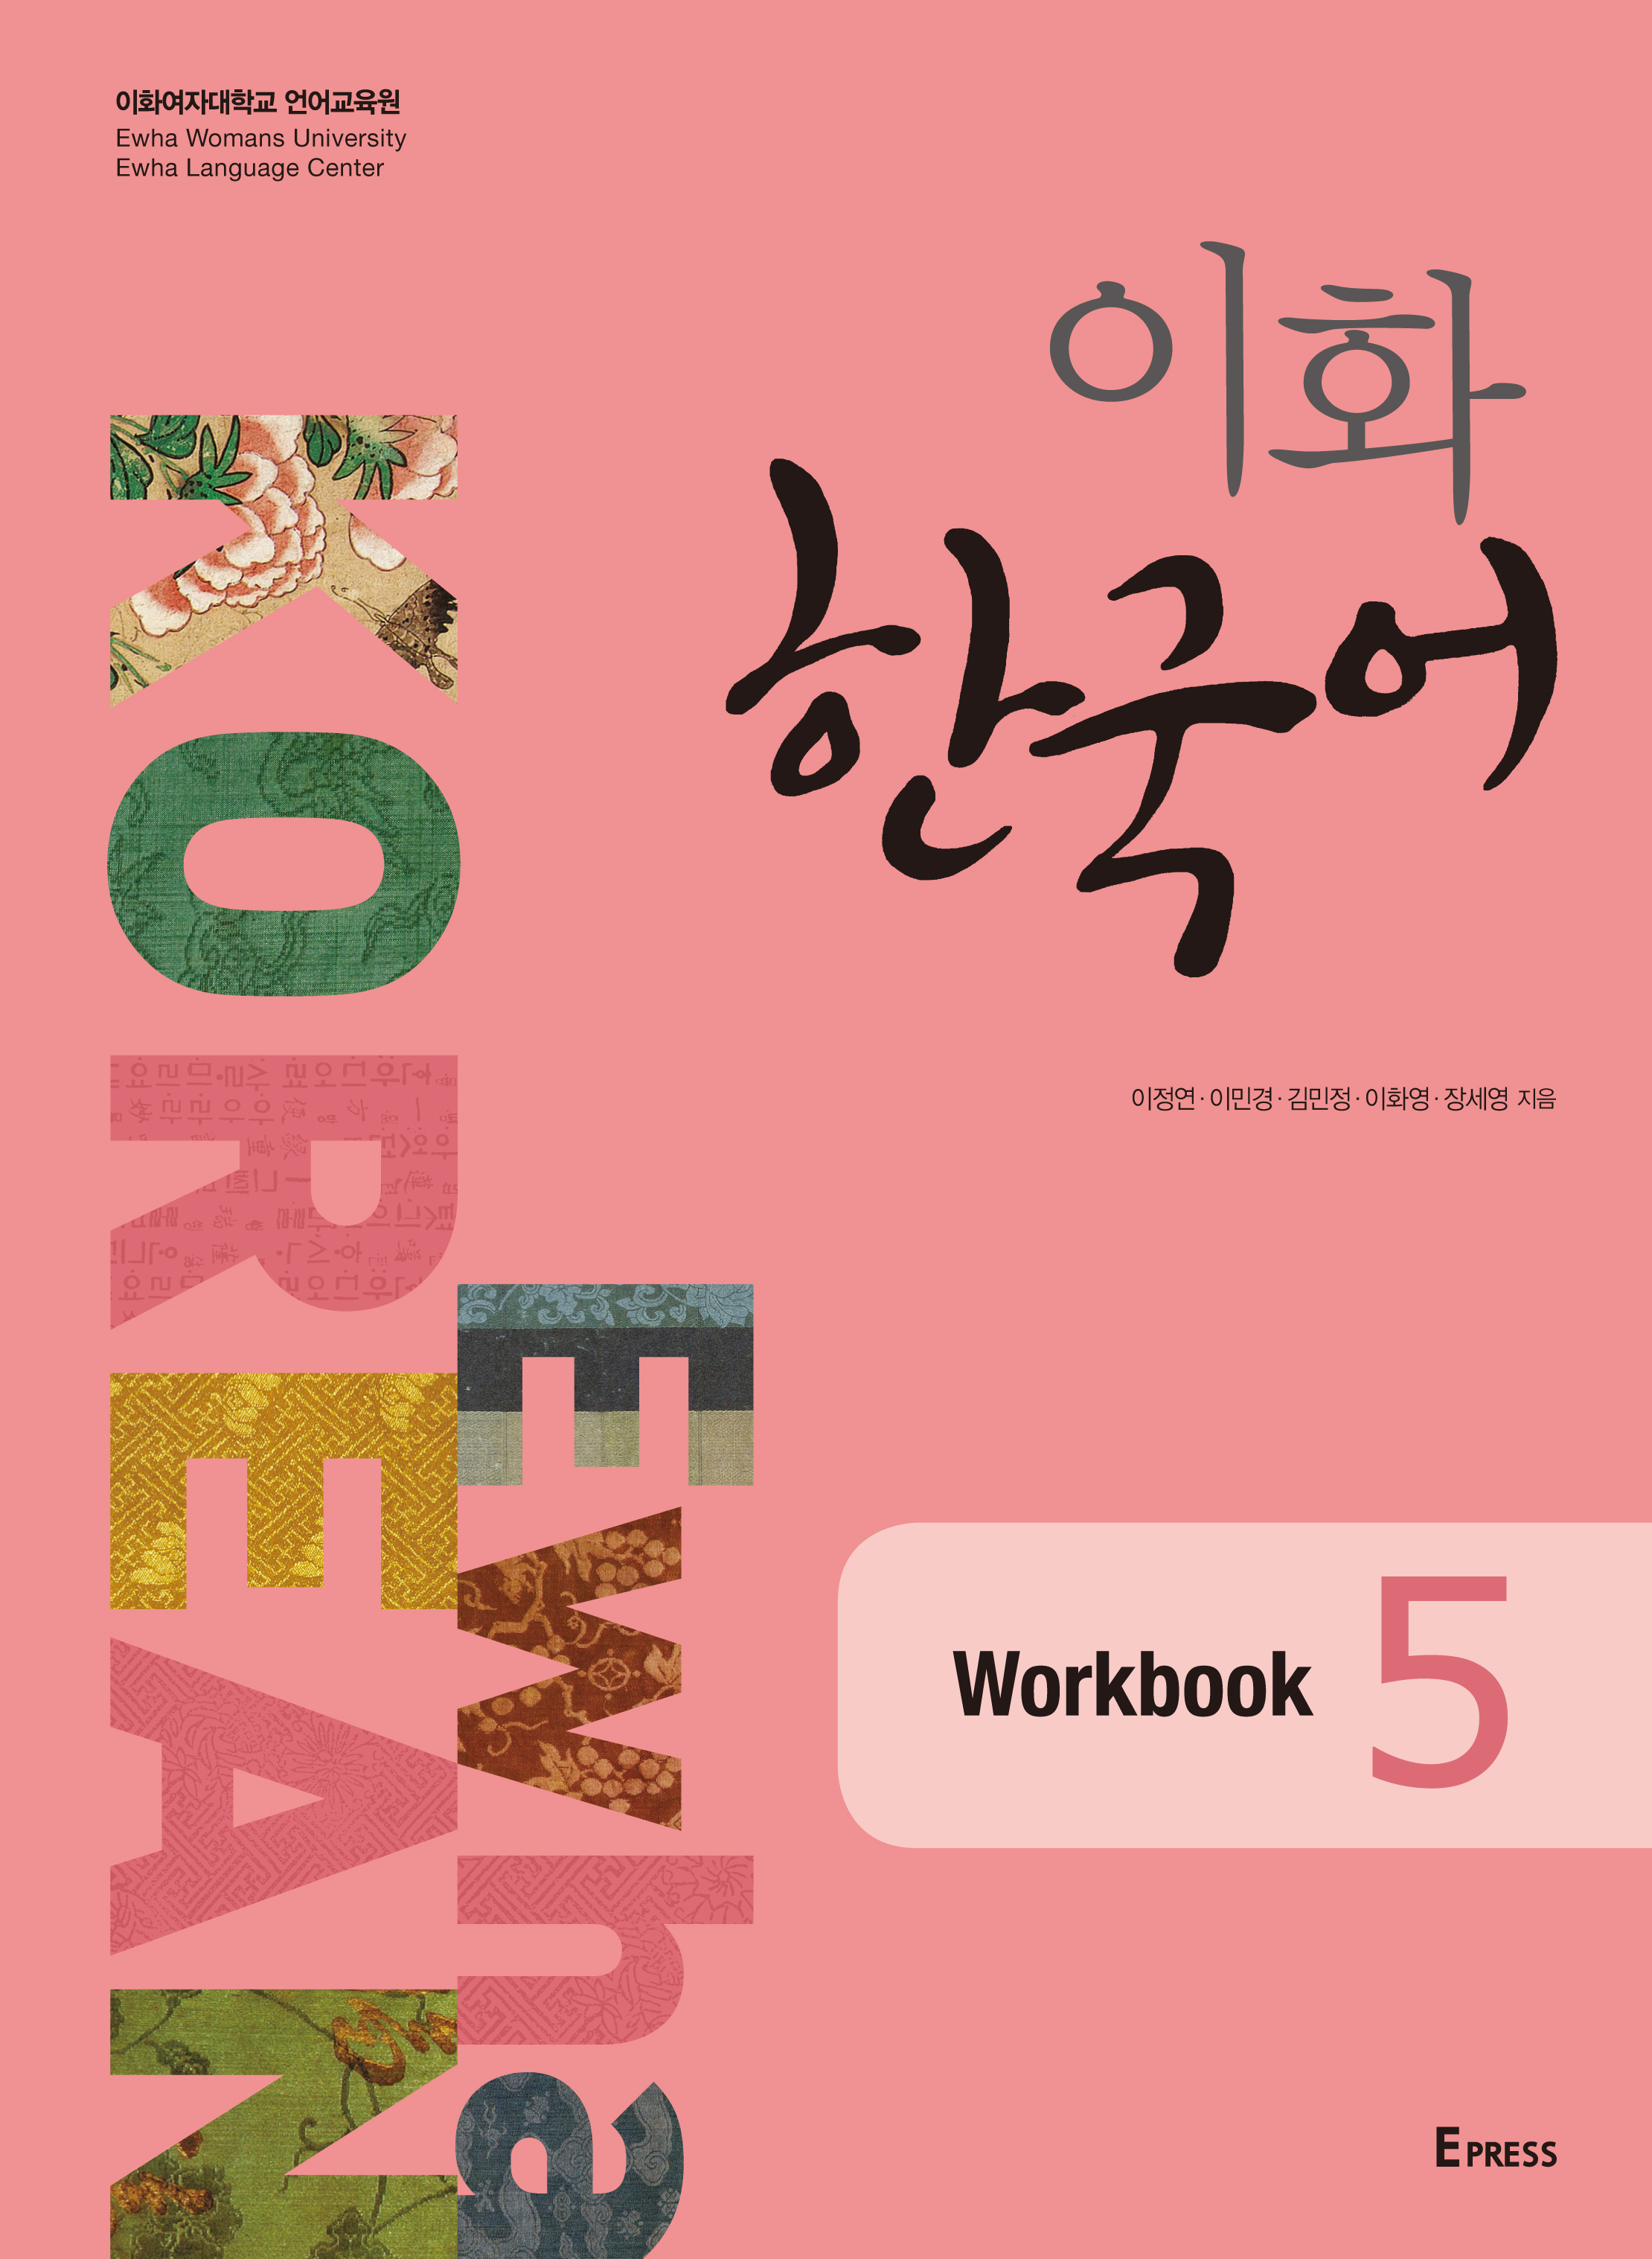  [EBOOK] Ewha Korean Workbook 5 도서이미지